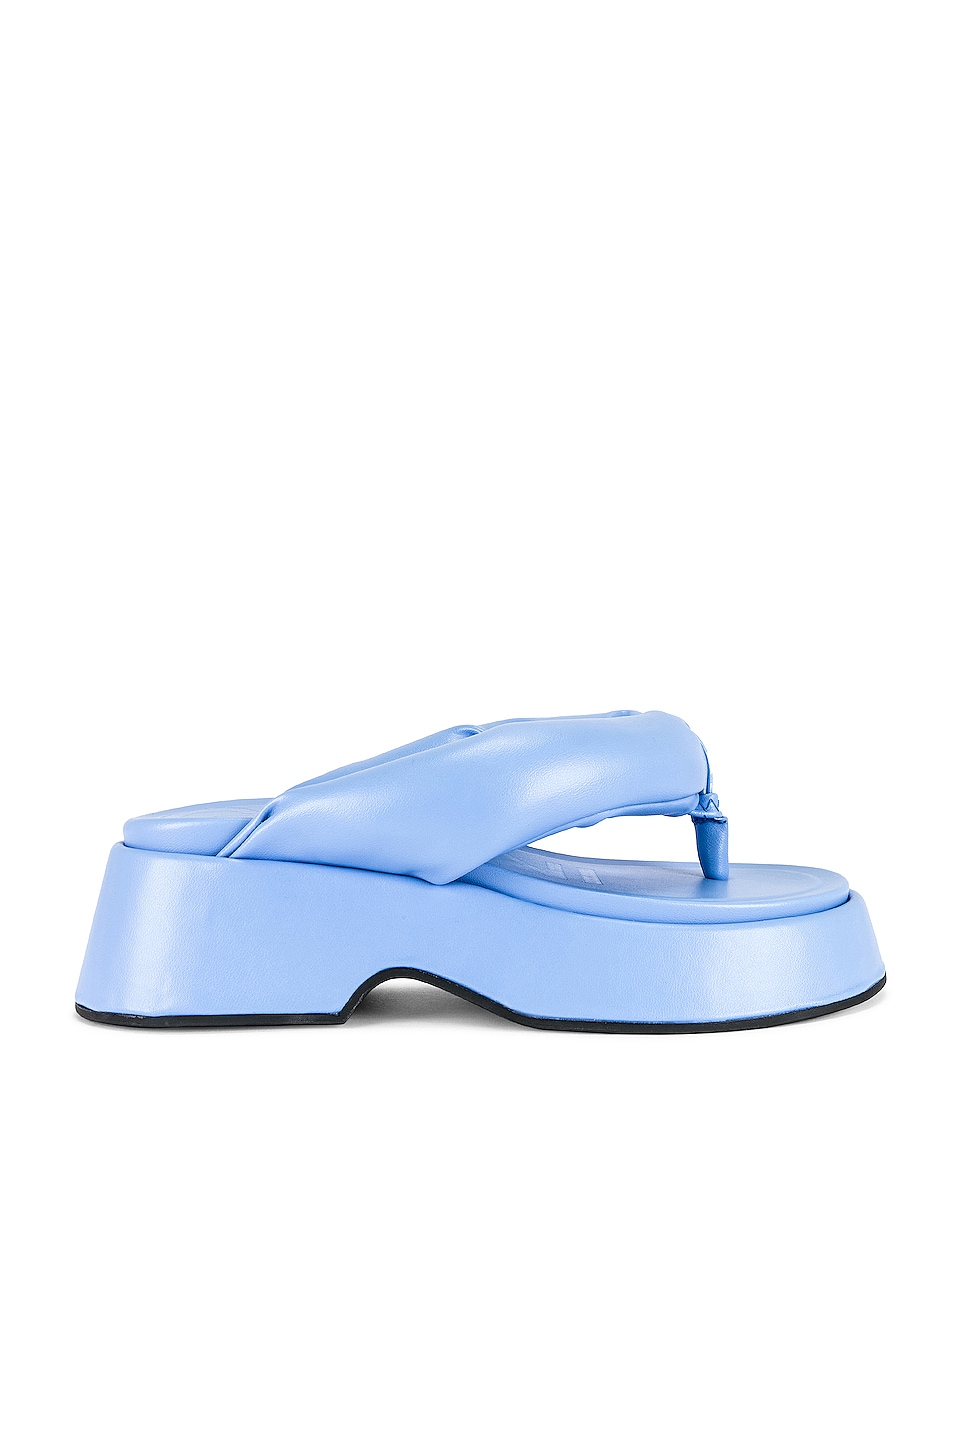 Ganni Retro Thong Flatform in Placid Blue | REVOLVE